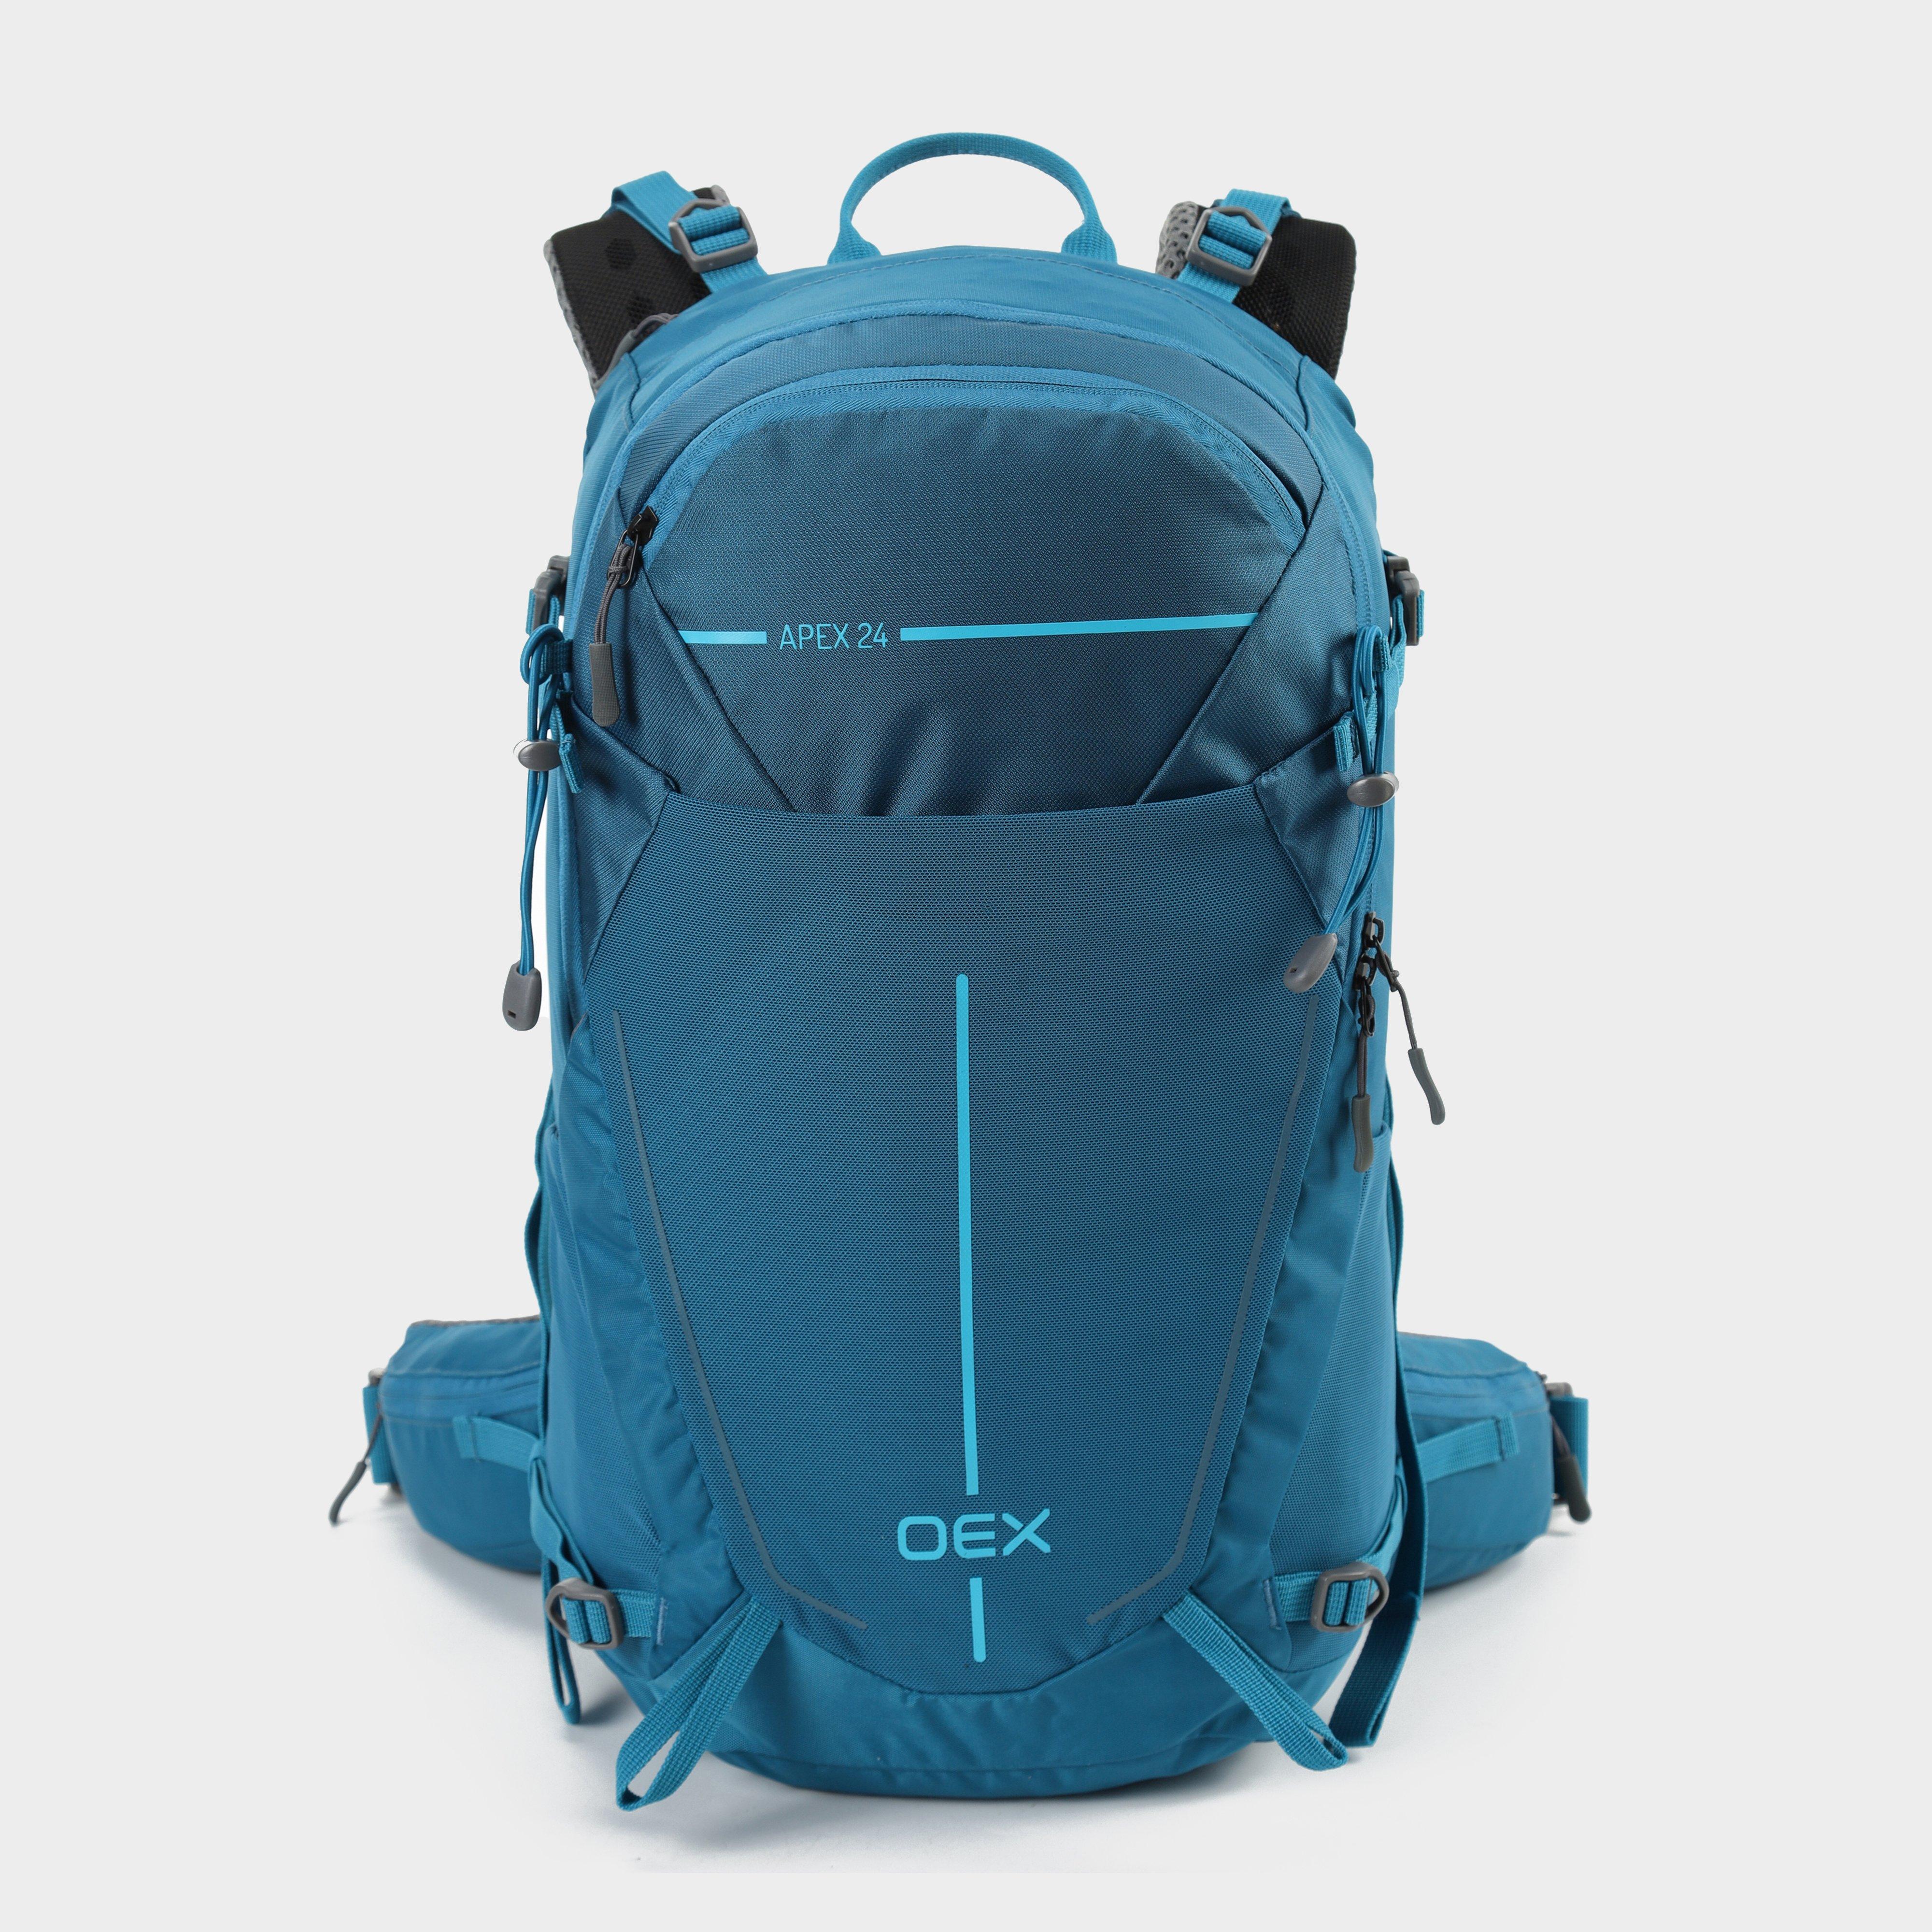 OEX Oex Apex 24L Backpack - Blu, BLU